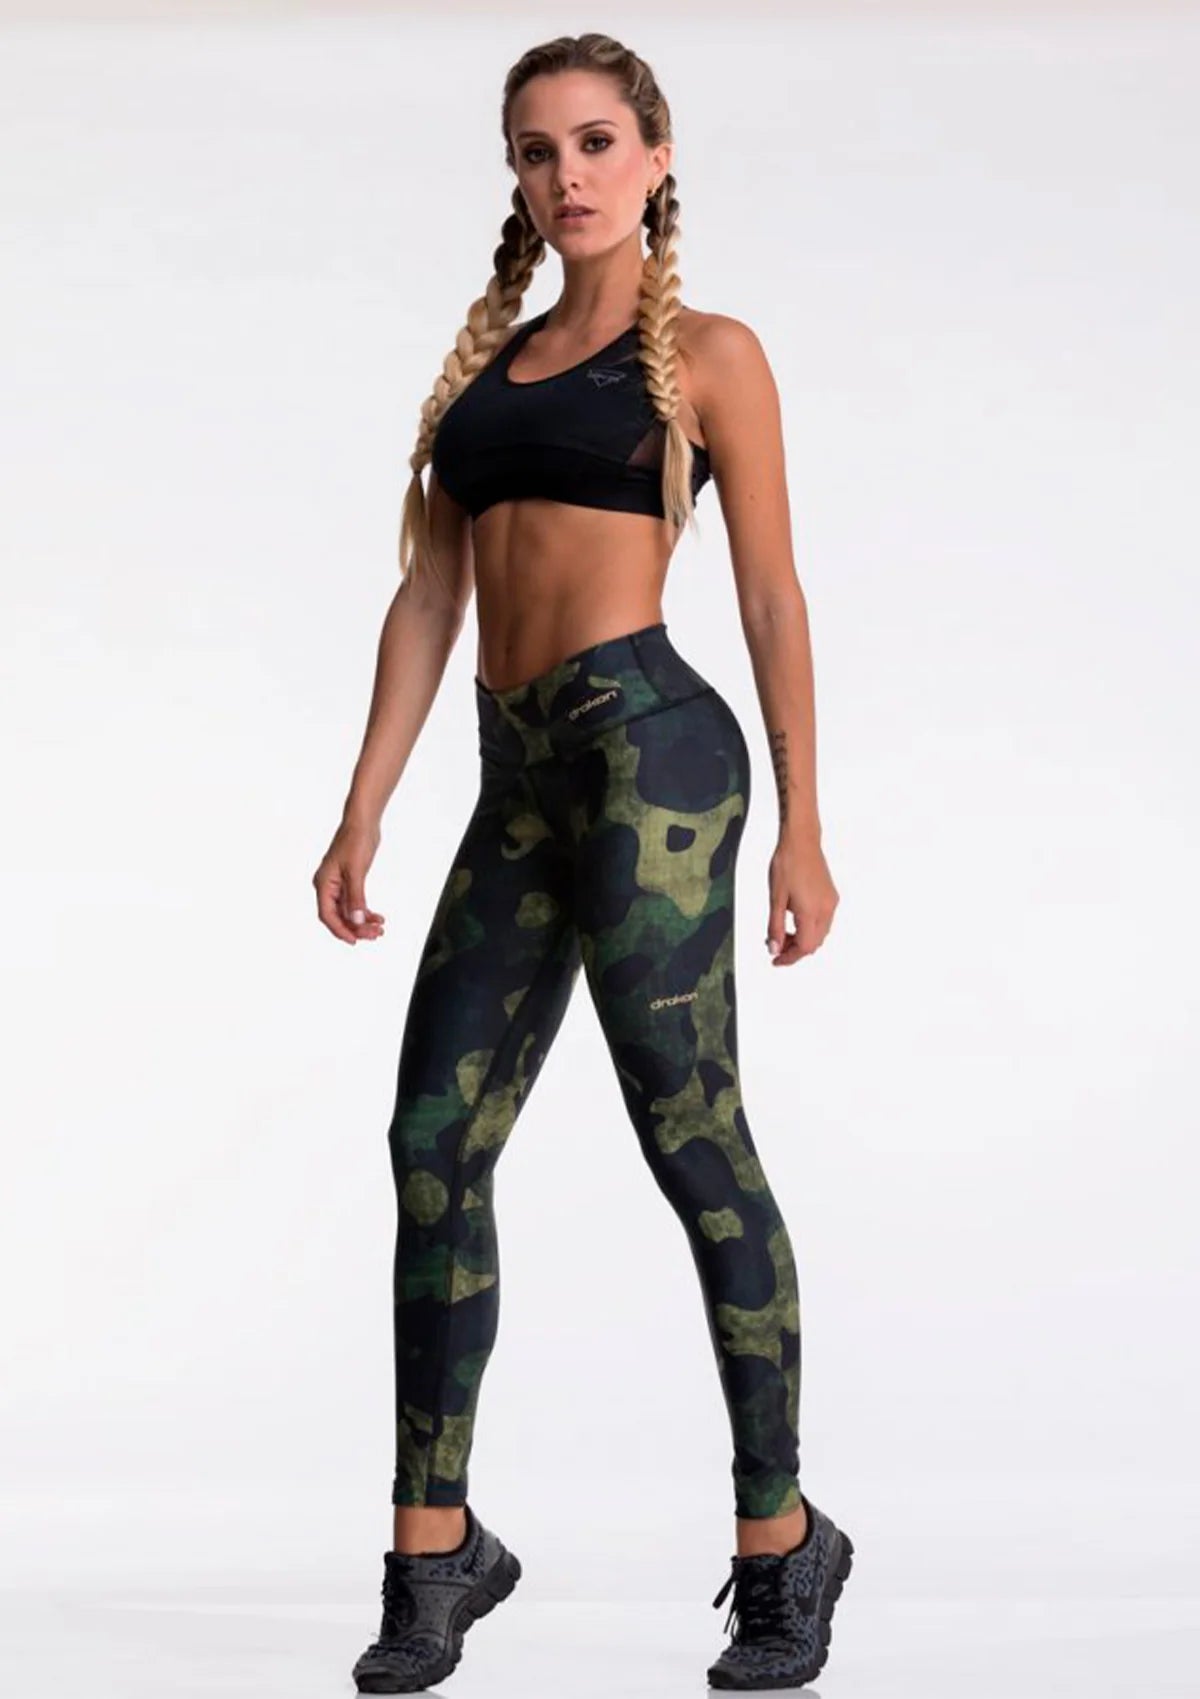 Camouflage - Military Look - Runner - Yoga Pants - Leggings - Fitness - Gym